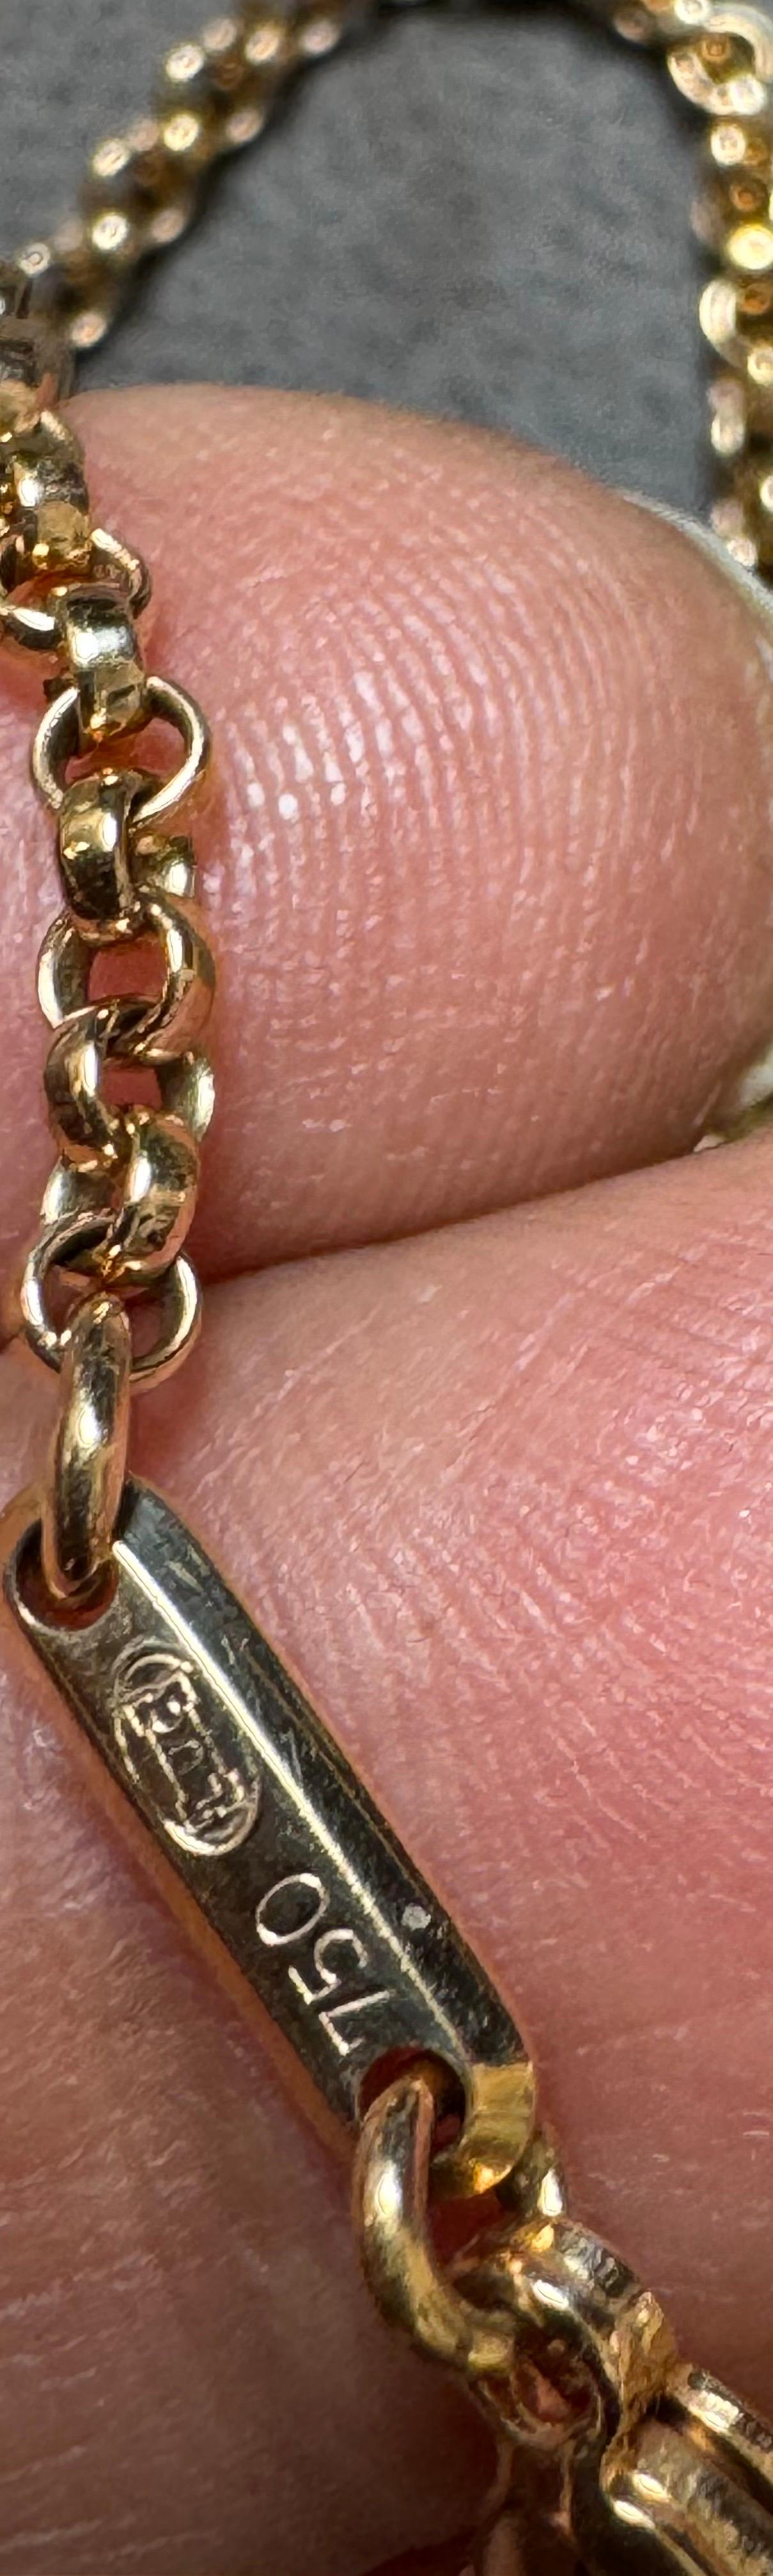 Chopard Chopardissimo 18Karat Yellow Gold Diamond Pendant Necklace Large, Estate For Sale 1